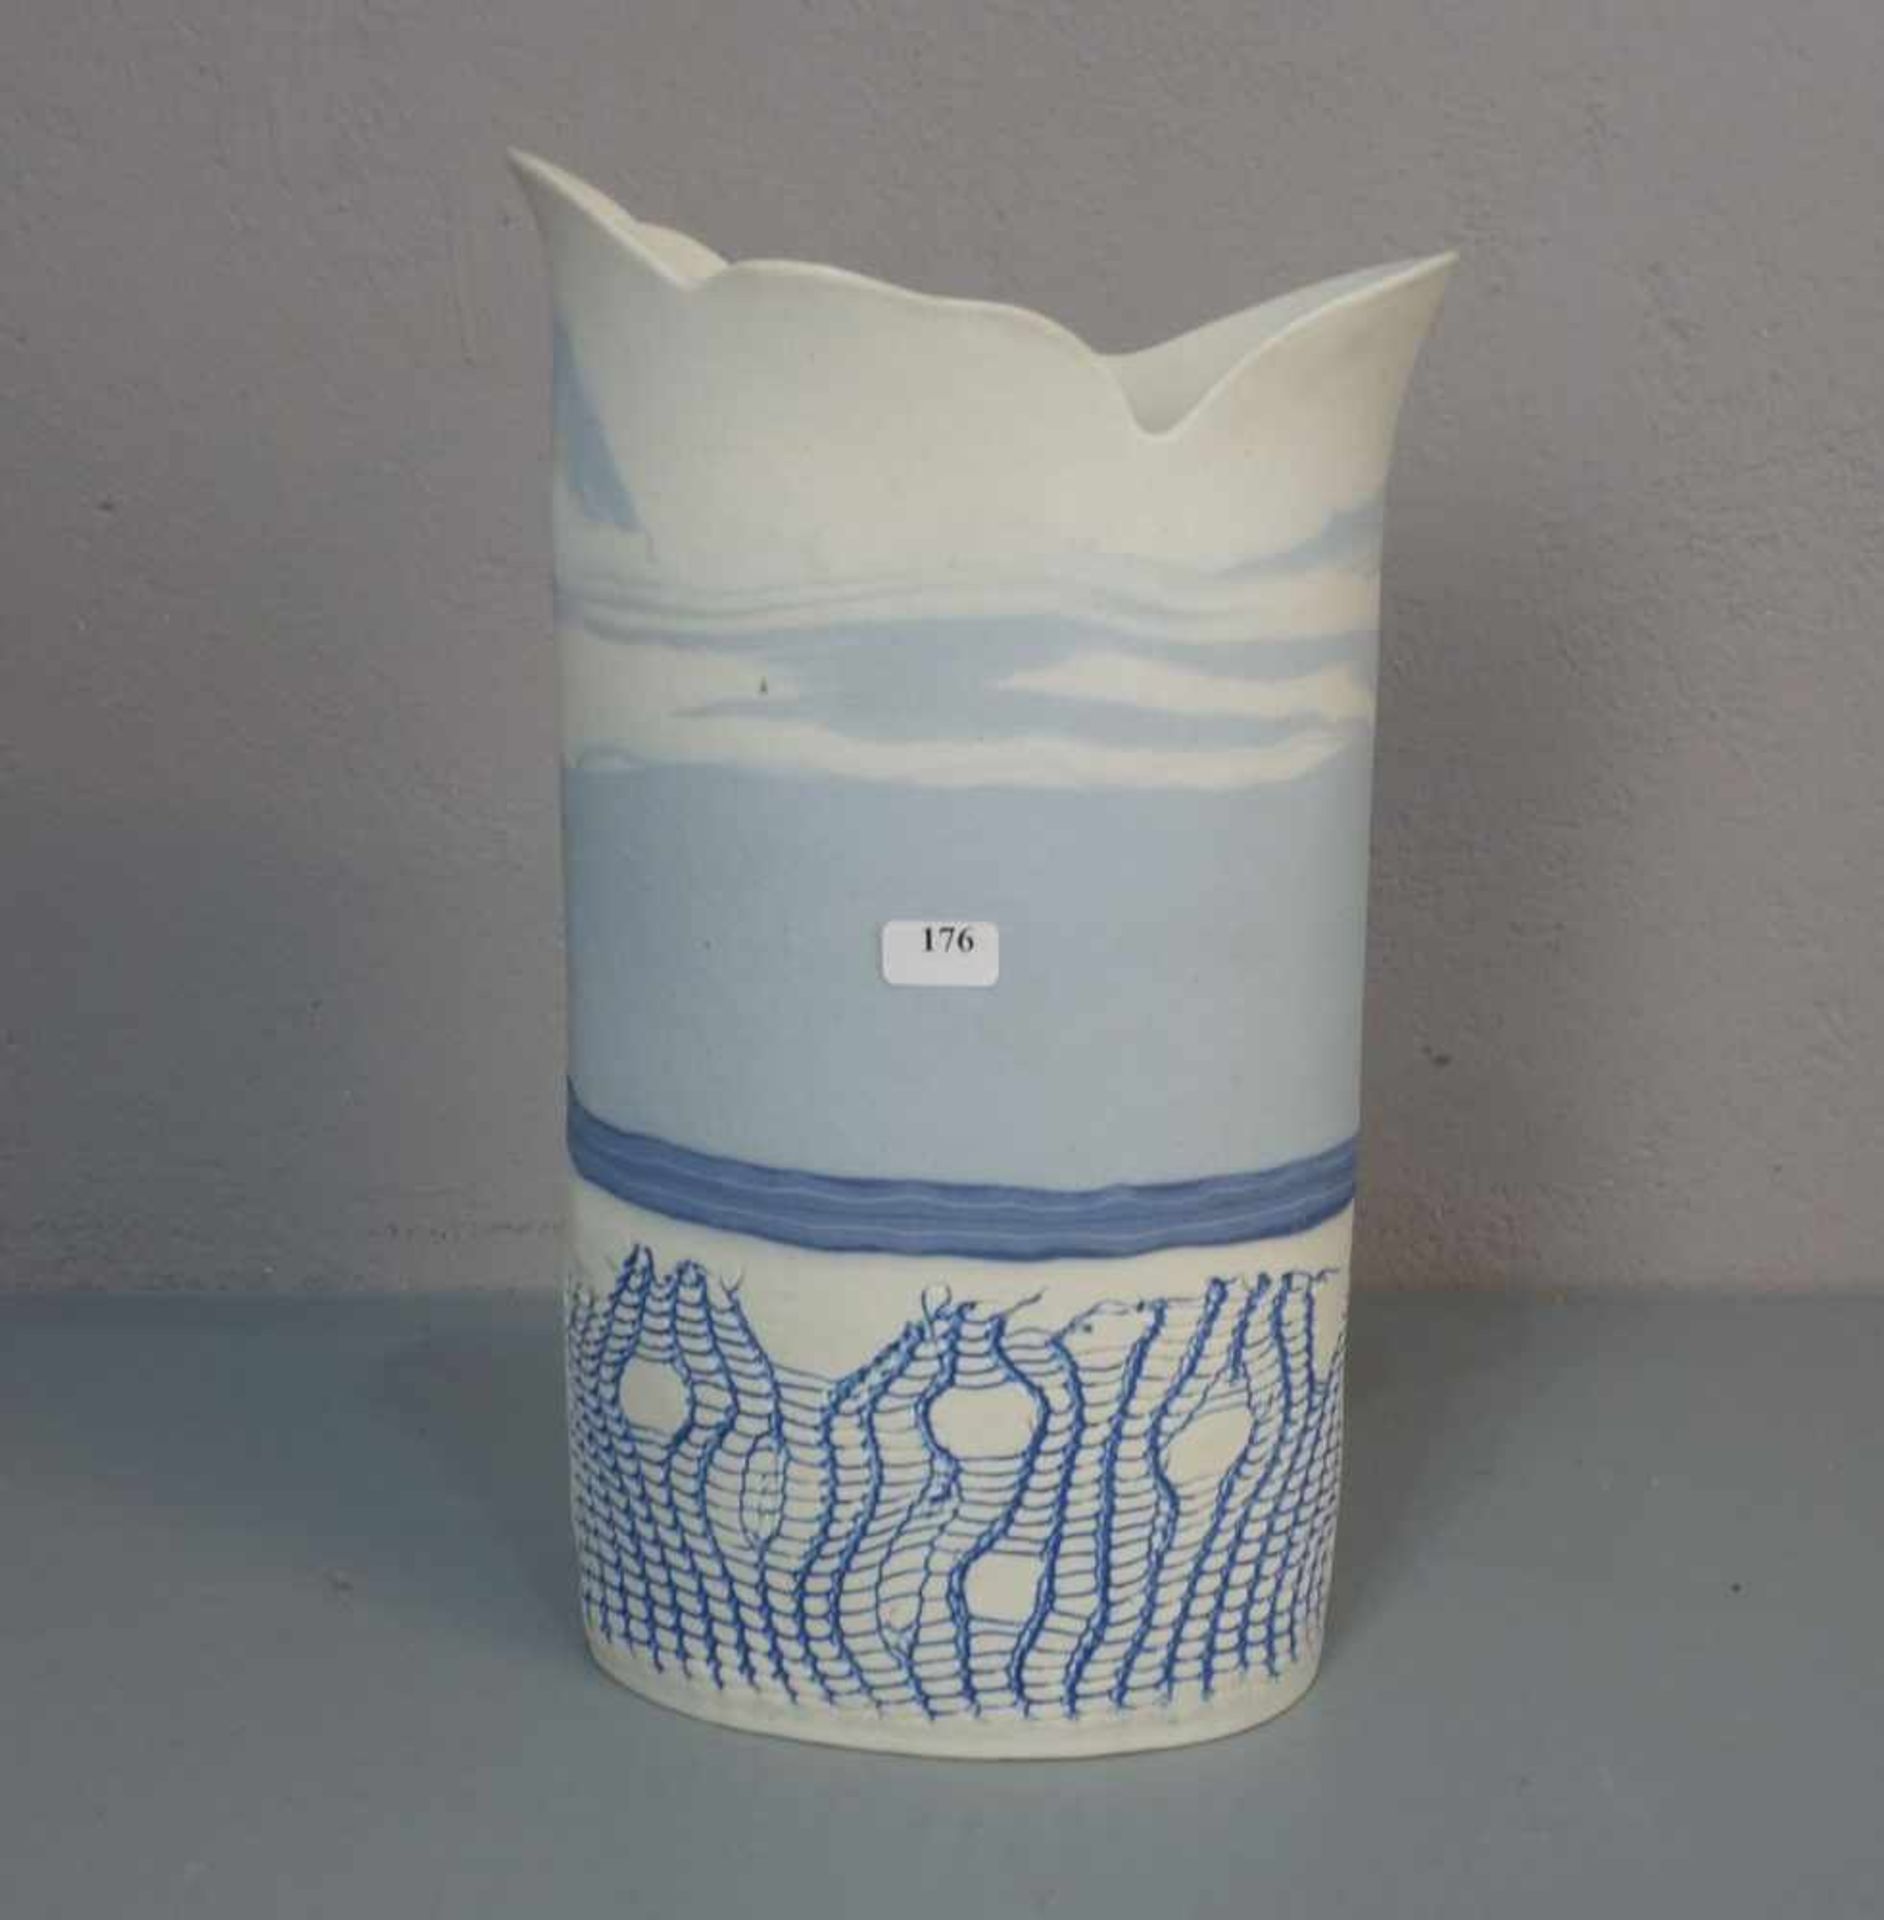 REGIUS, LENE (Dänische Keramikkünstlerin, 20. Jh.), Studiokeramik: "Vase", heller Scherben, partiell